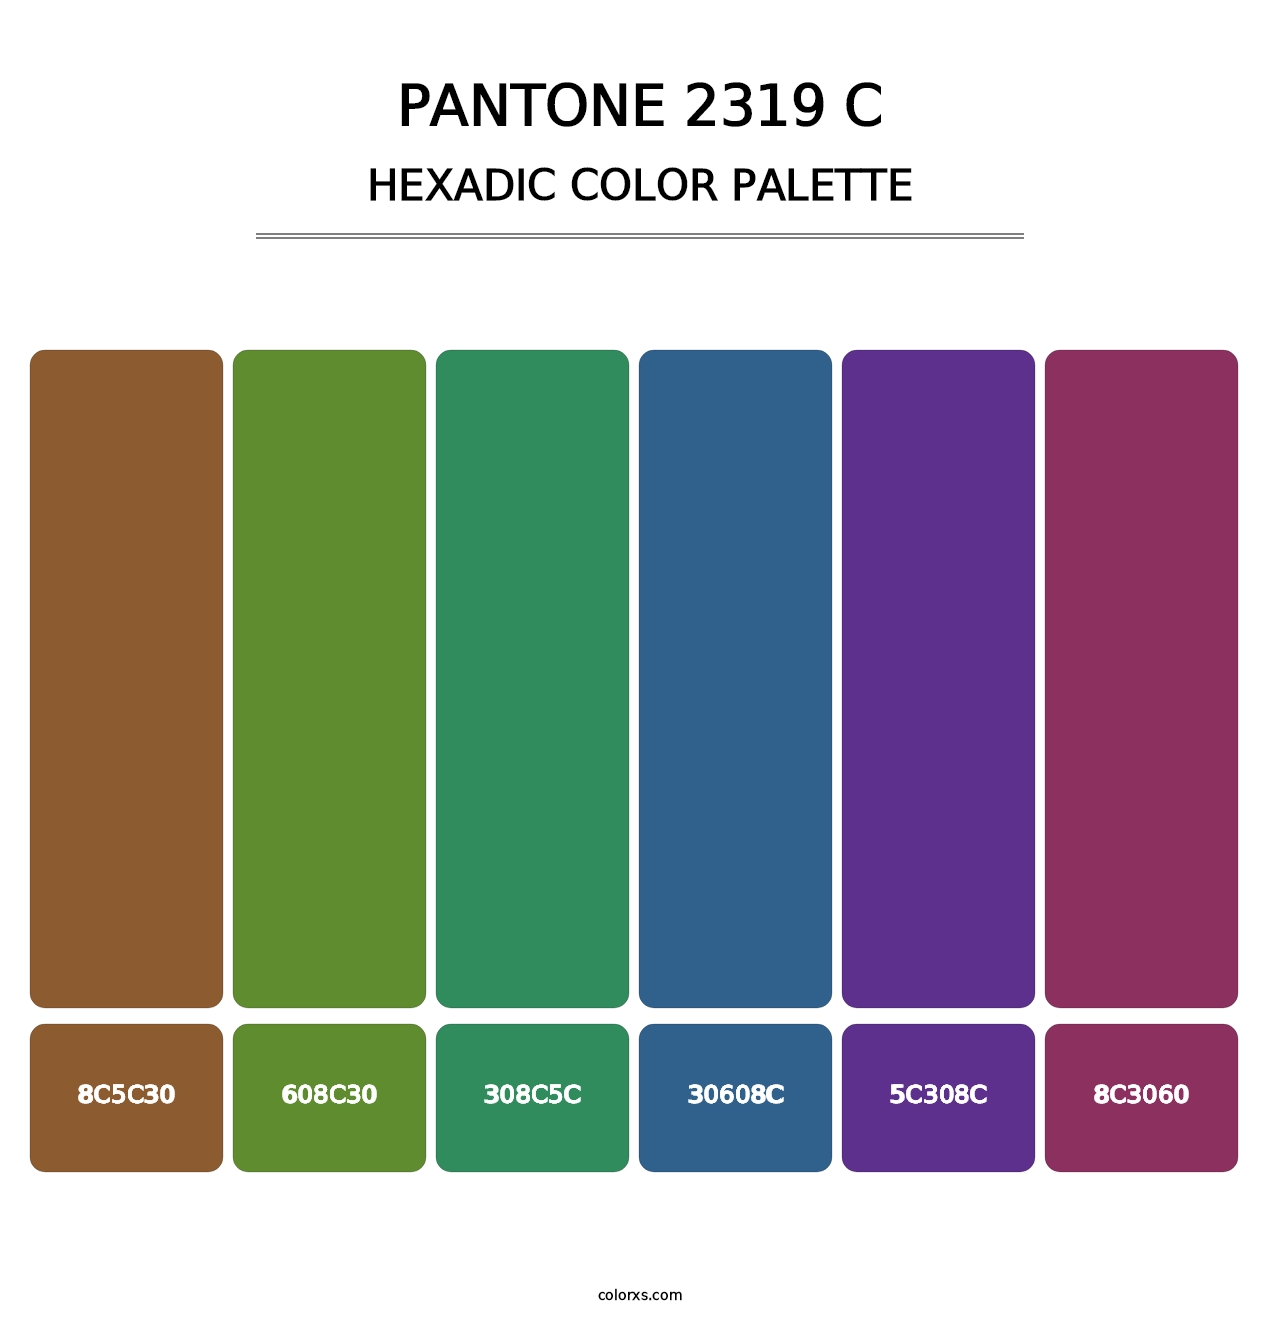 PANTONE 2319 C - Hexadic Color Palette